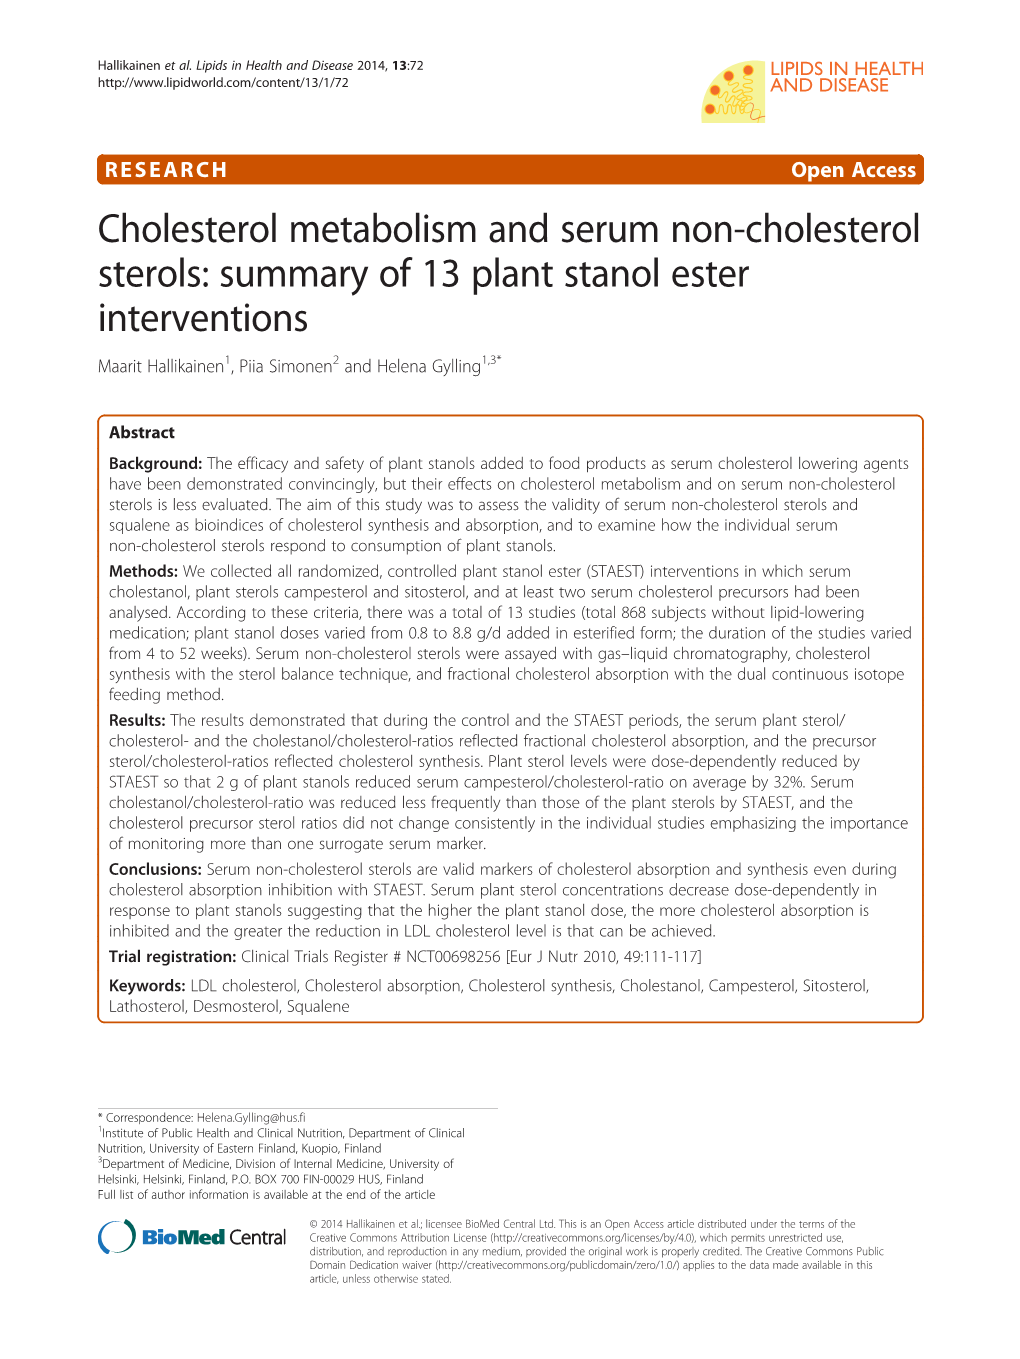 Cholesterol Metabolism and Serum Non-Cholesterol Sterols: Summary of 13 Plant Stanol Ester Interventions Maarit Hallikainen1, Piia Simonen2 and Helena Gylling1,3*